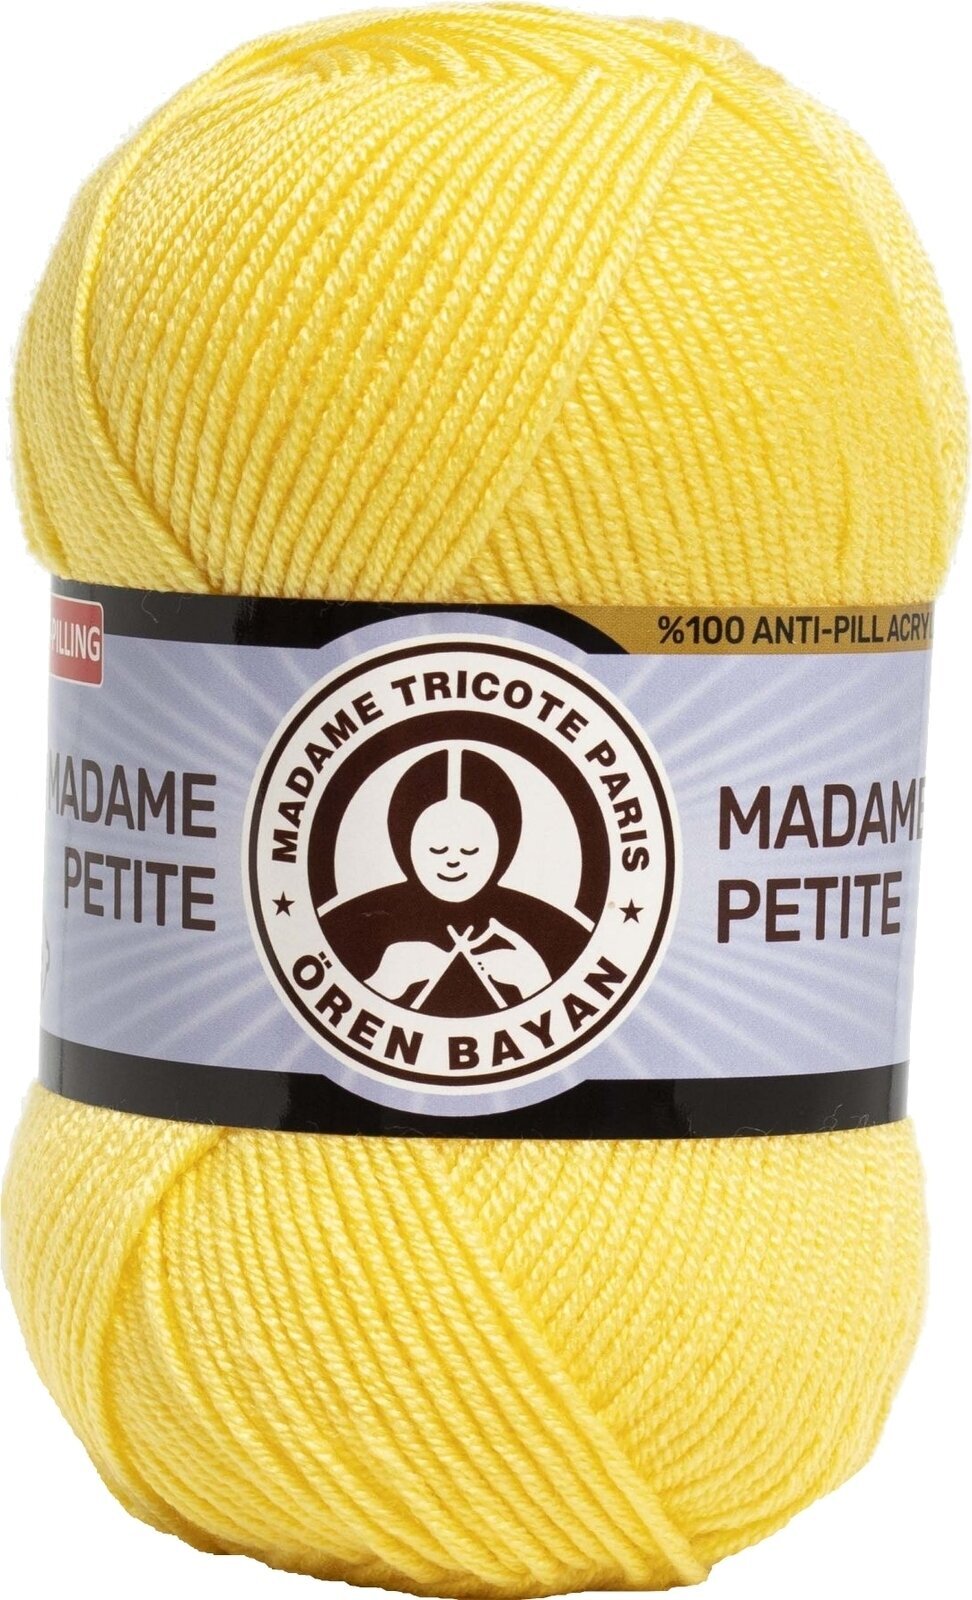 Knitting Yarn Madame Tricote Paris Madame Petite 3848 28 Knitting Yarn